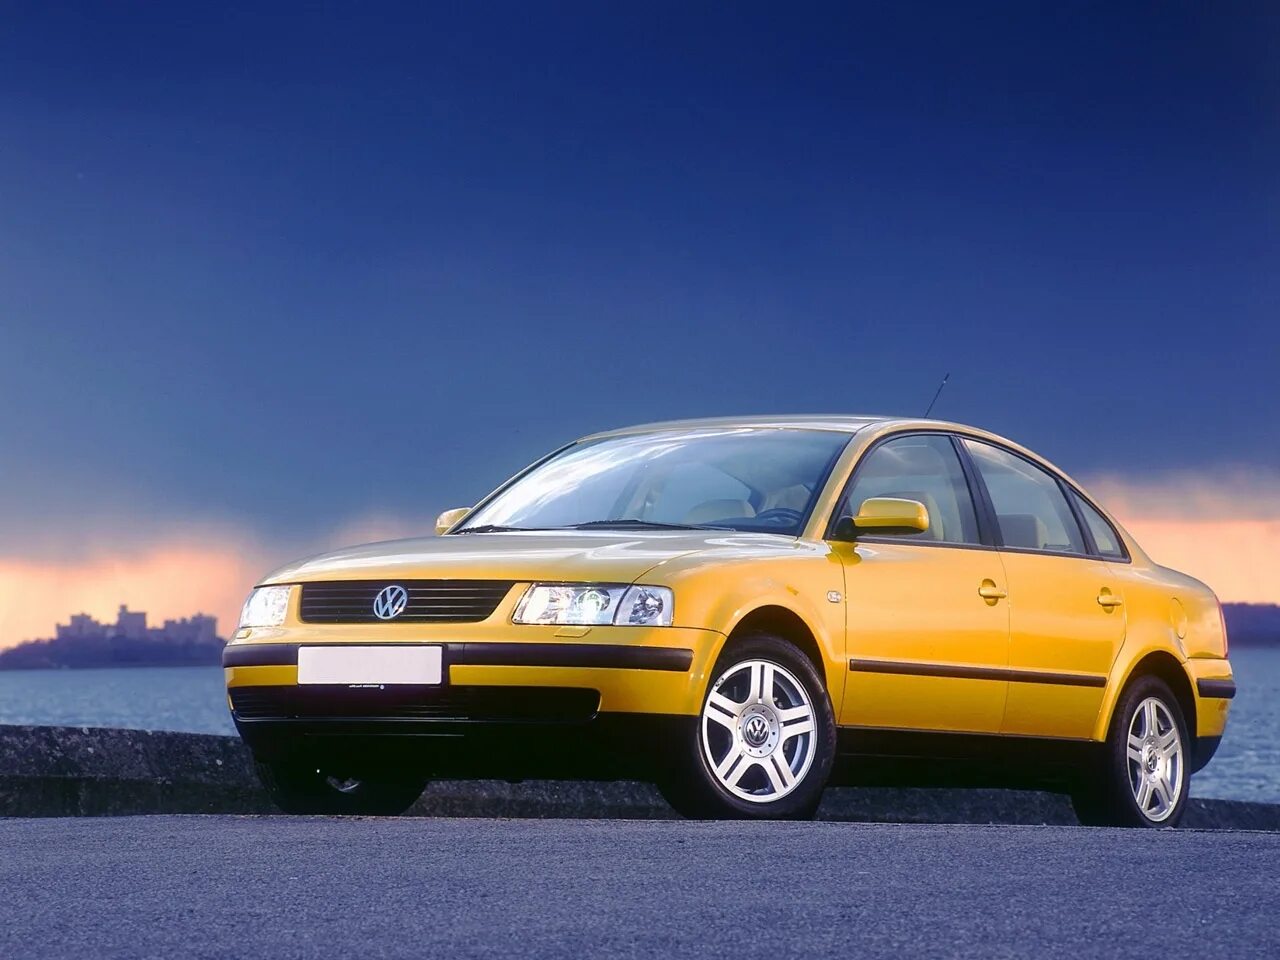 World 5 b. Volkswagen Passat b5 седан. Фольксваген Пассат в 5 седан. VW Passat b5 2000. Фольксваген Пассат б5 желтый.